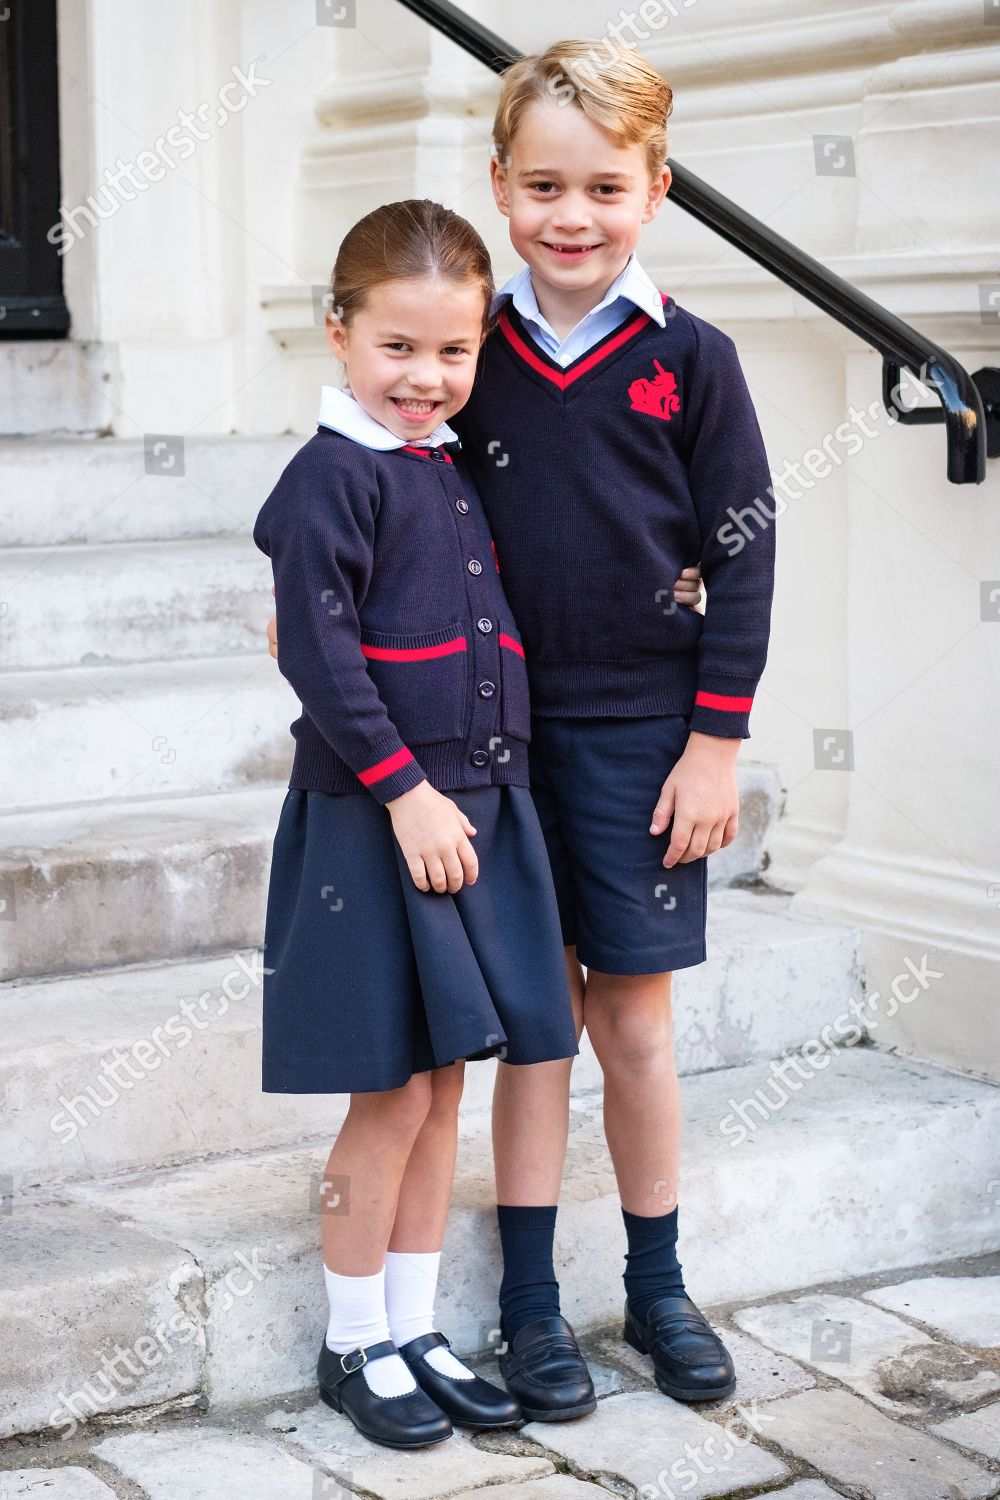 princess-charlottes-first-day-at-school-thomass-battersea-london-uk-shutterstock-editorial-10402217a.jpg